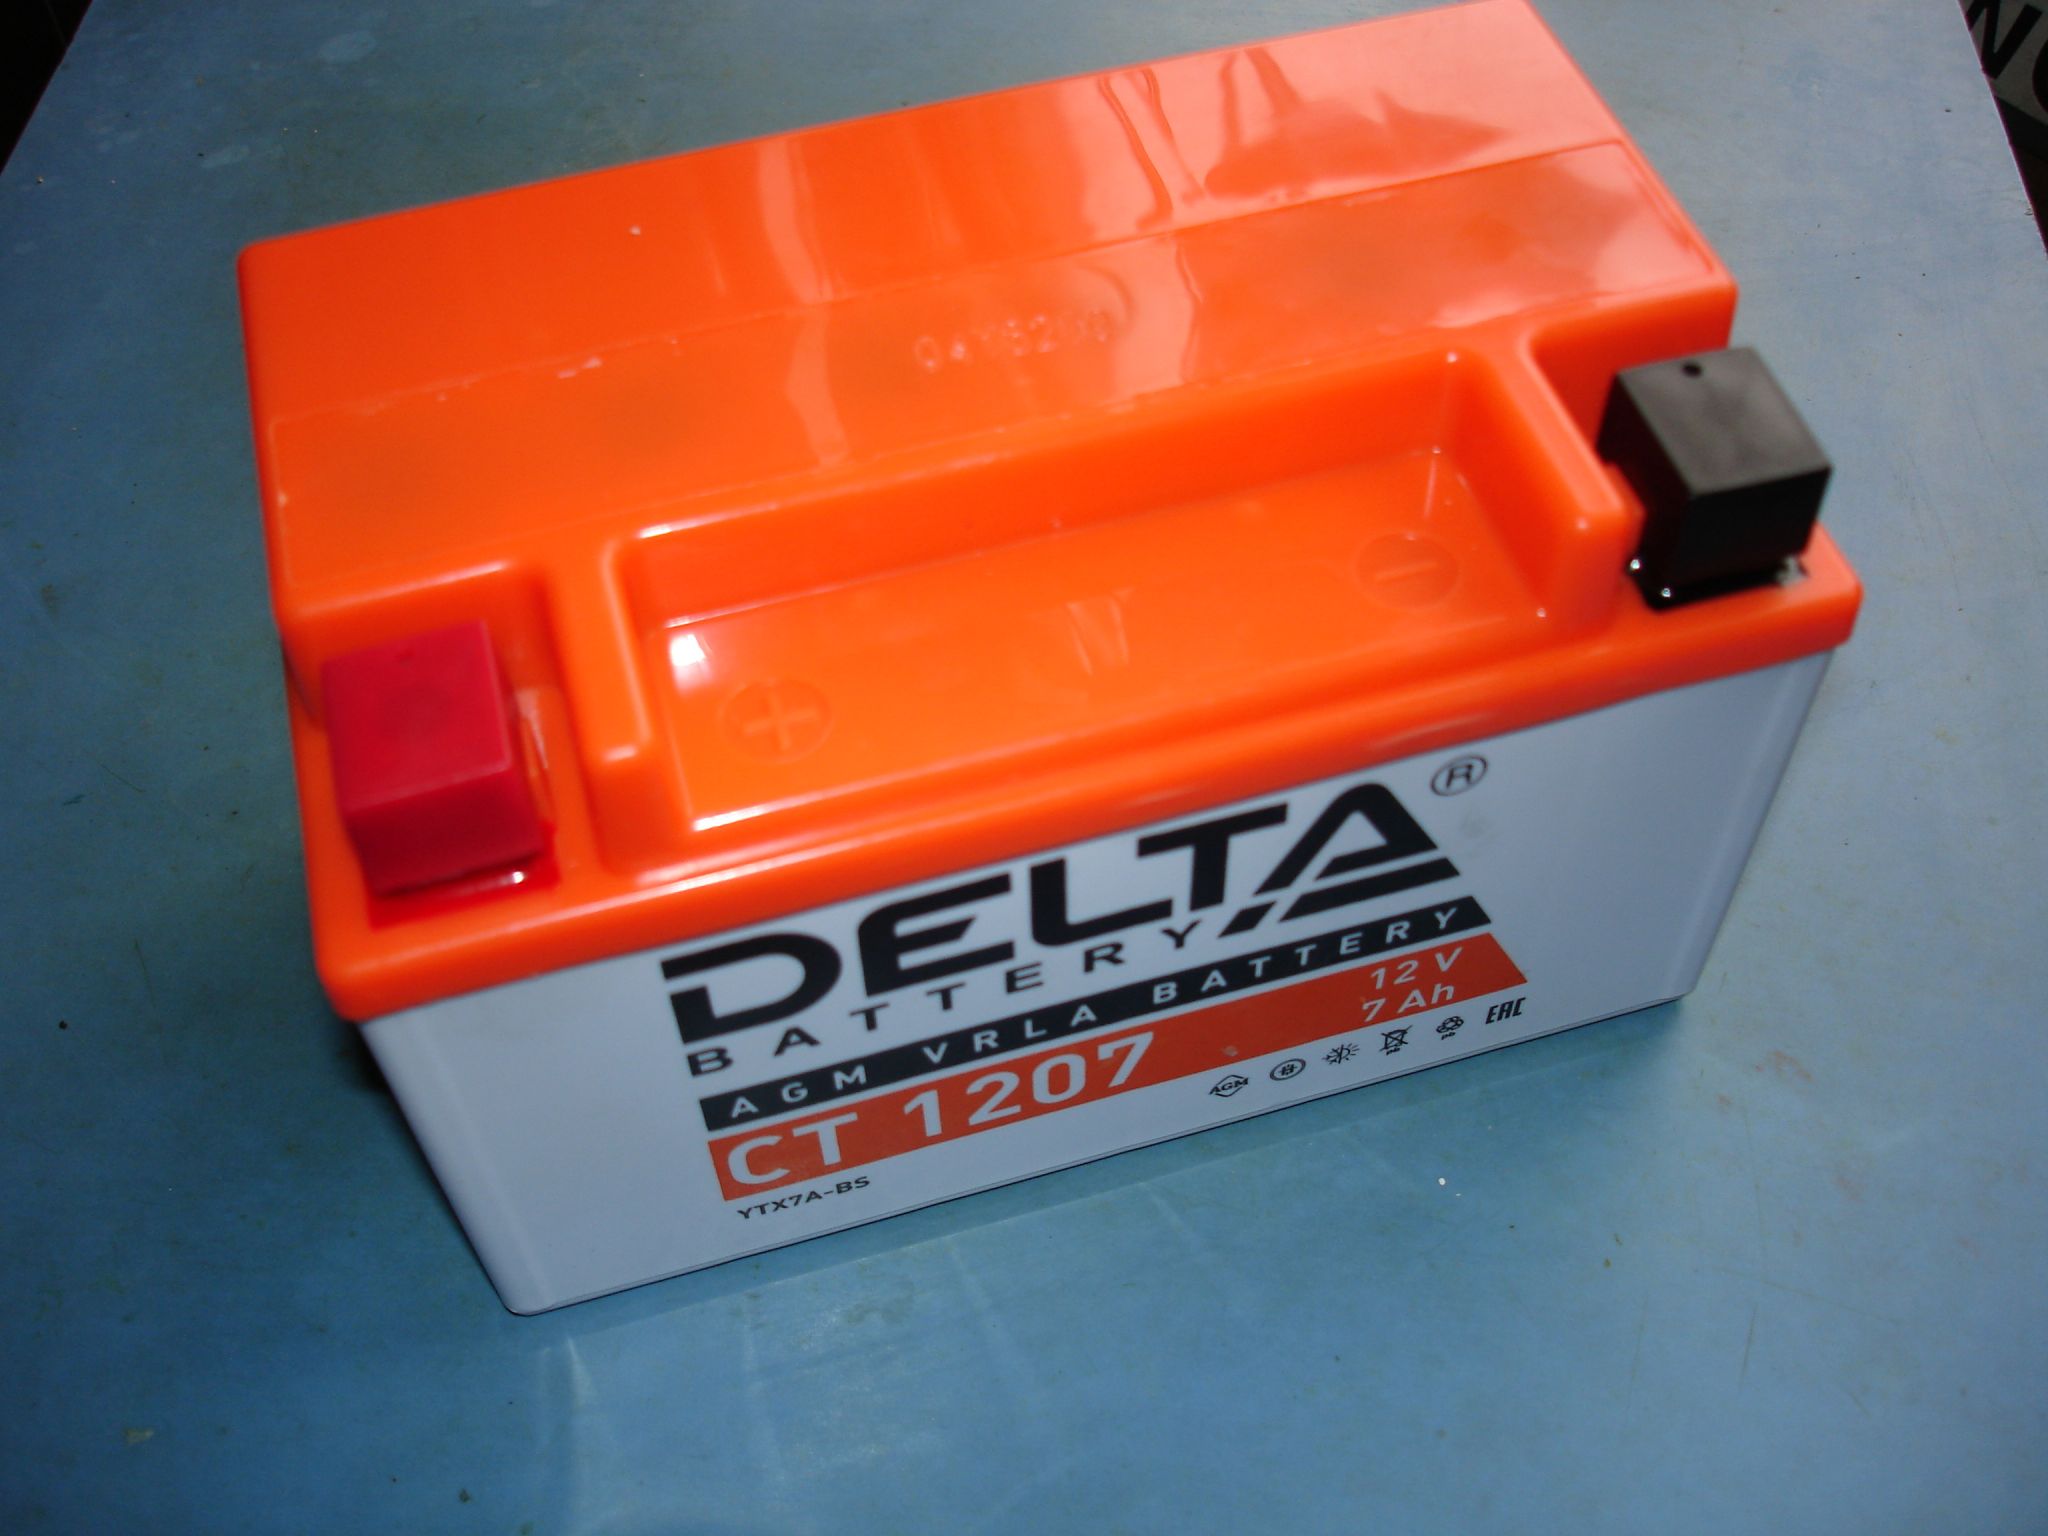 Battery 1207. Delta CT 1207. Аккумулятор Delta CT 1207. Аккумуляторная батарея Delta CT 1207. Аккумулятор Delta Battery ct1207.